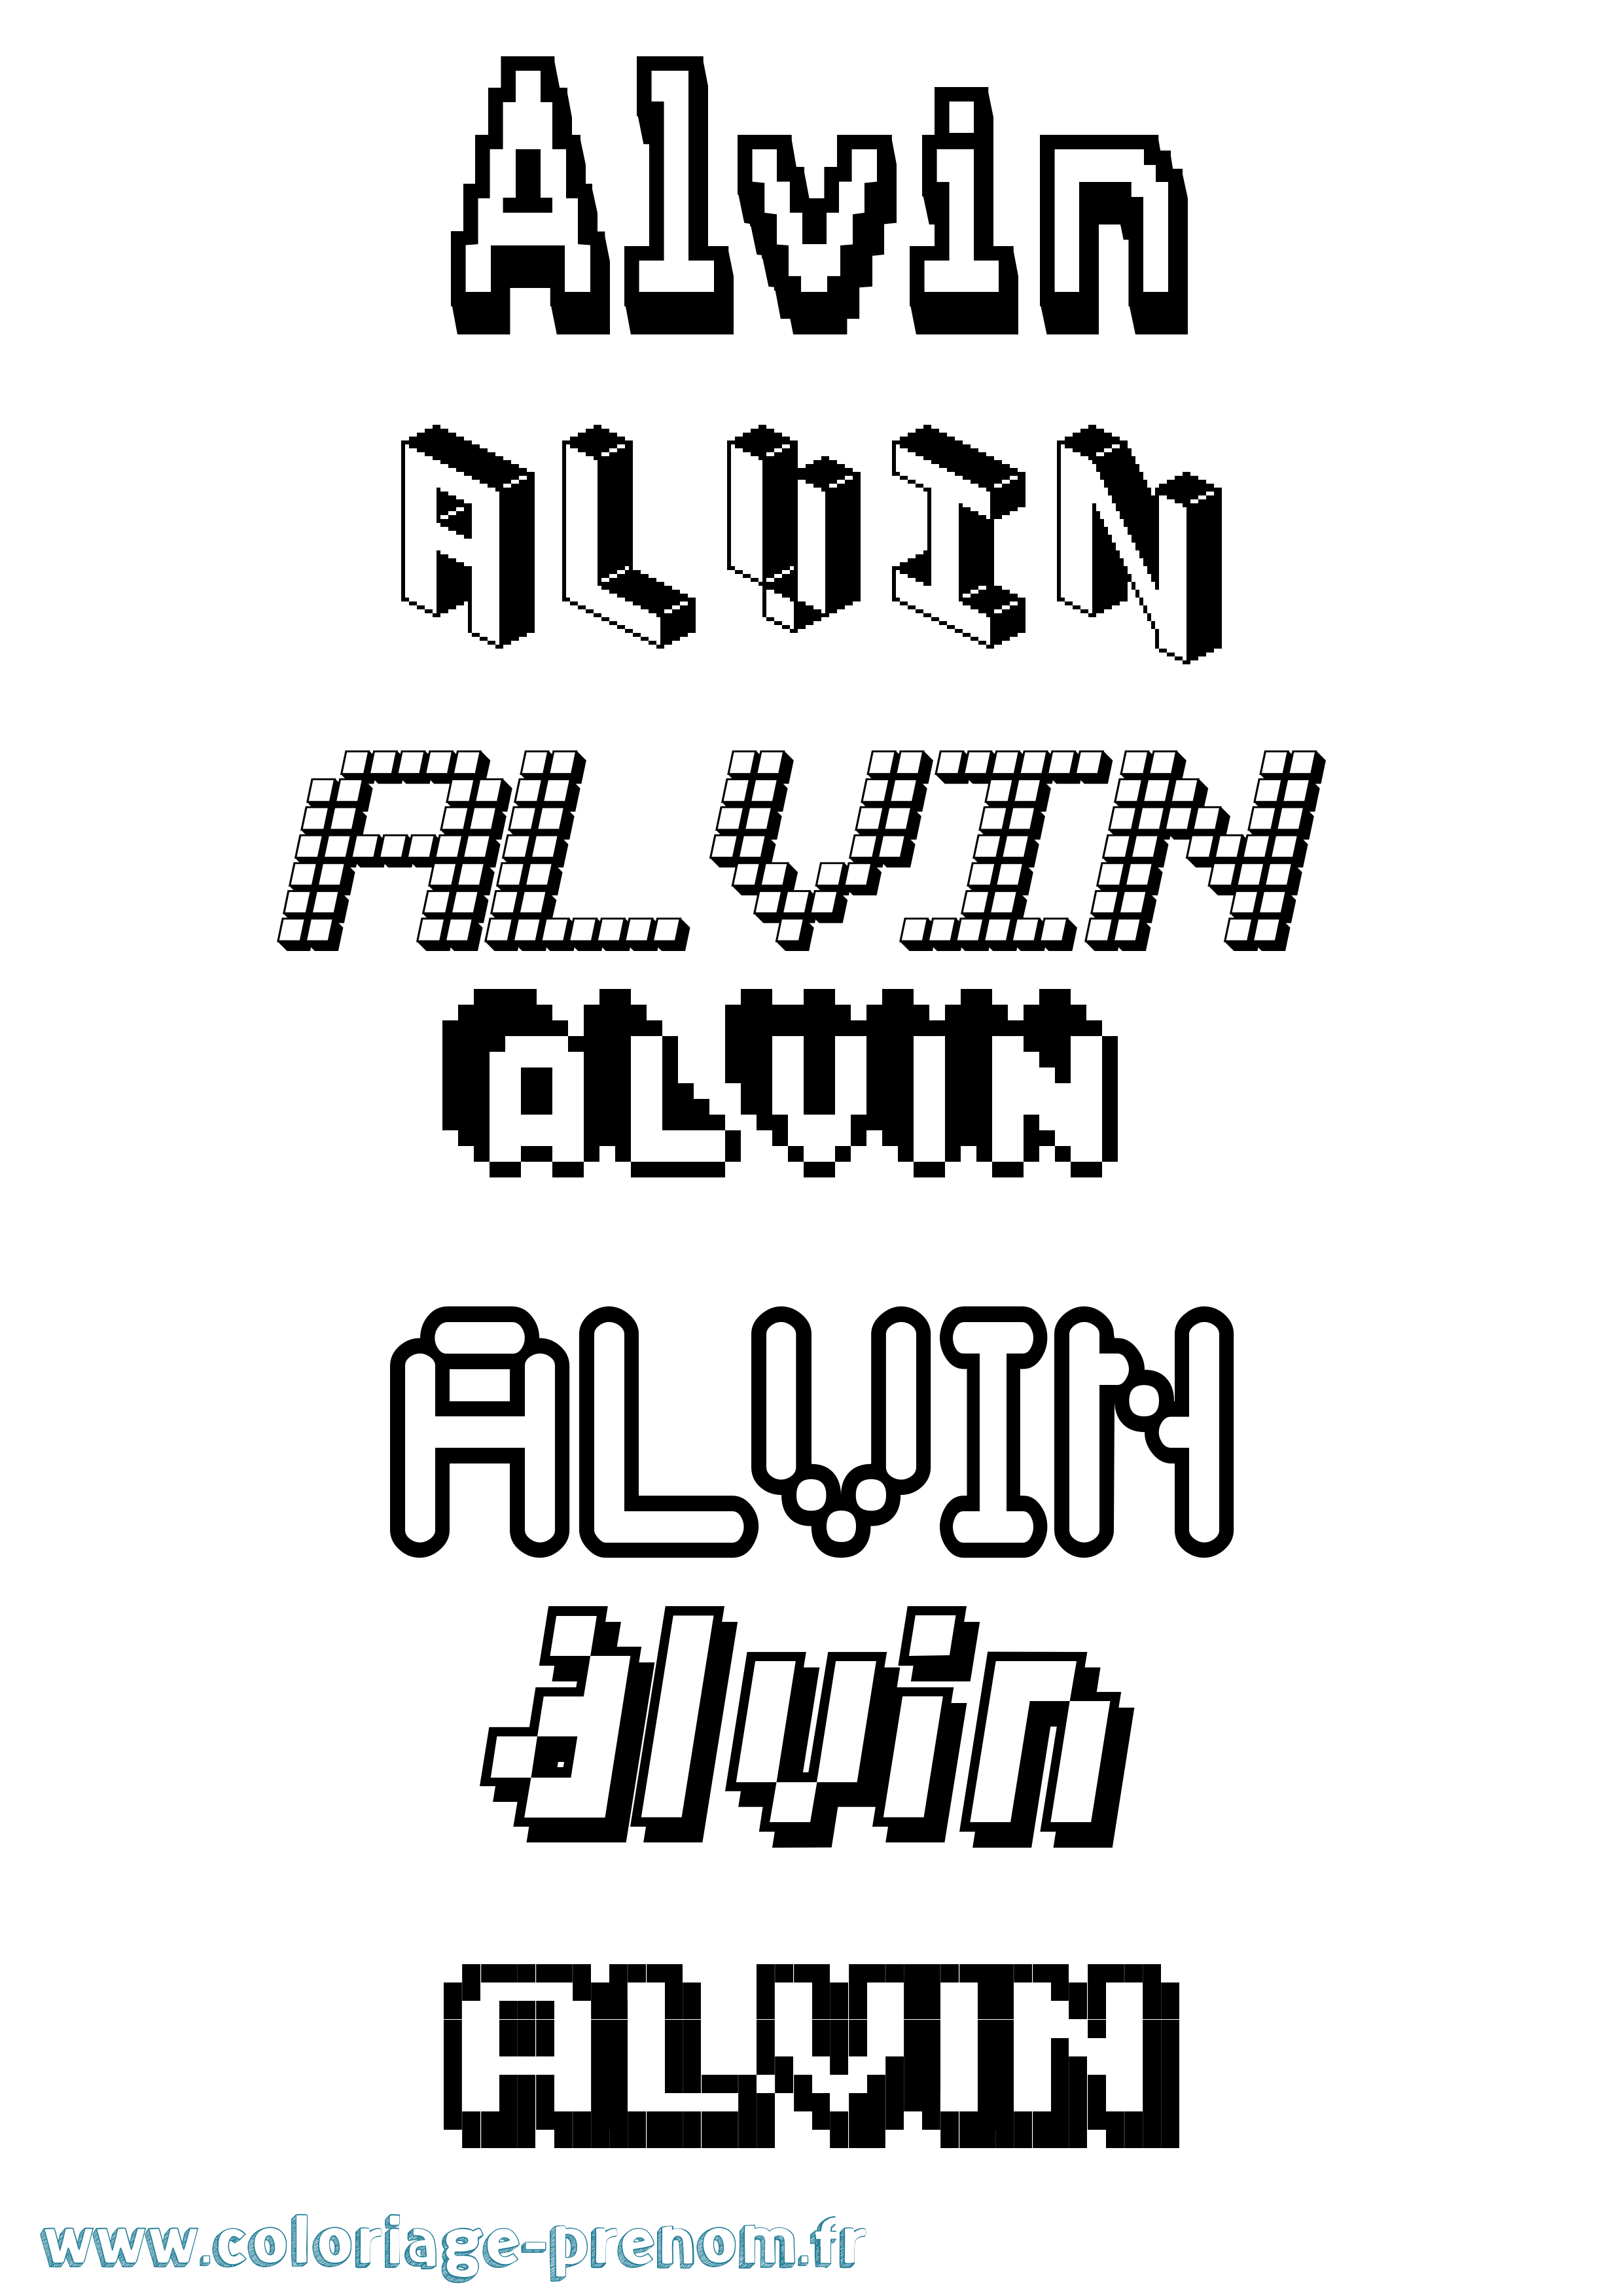 Coloriage prénom Alvin Pixel